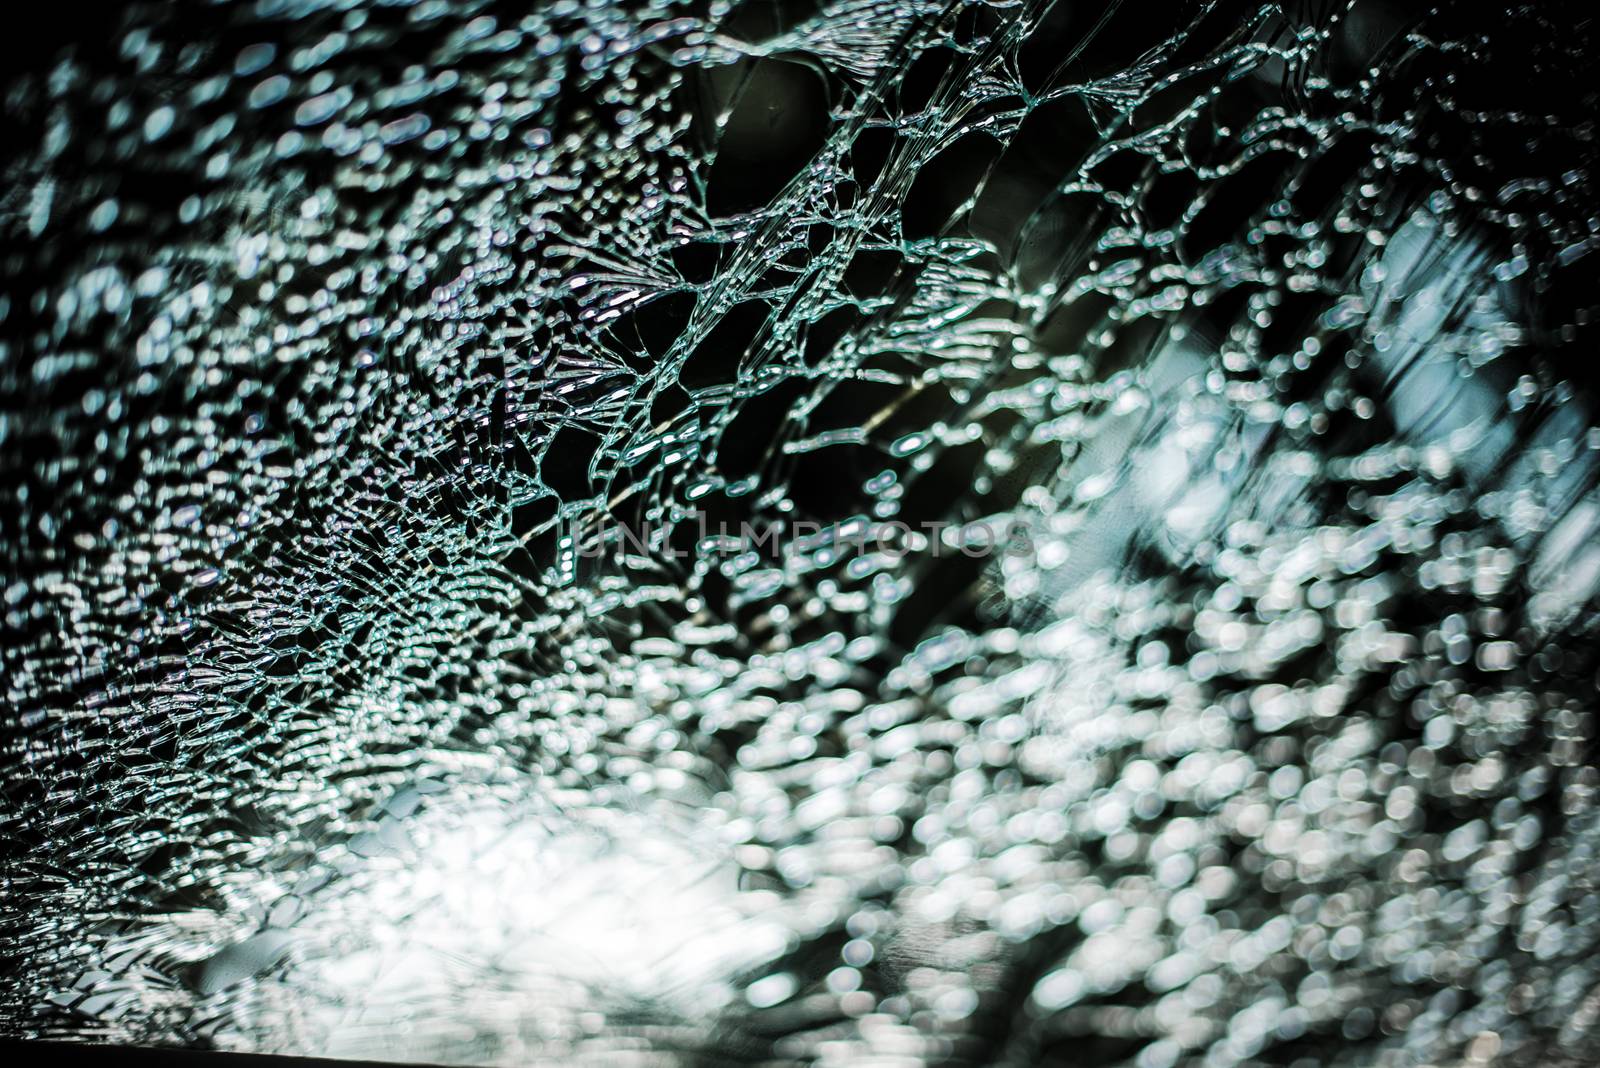 Damaged glass pattern background, Car front glass damaged